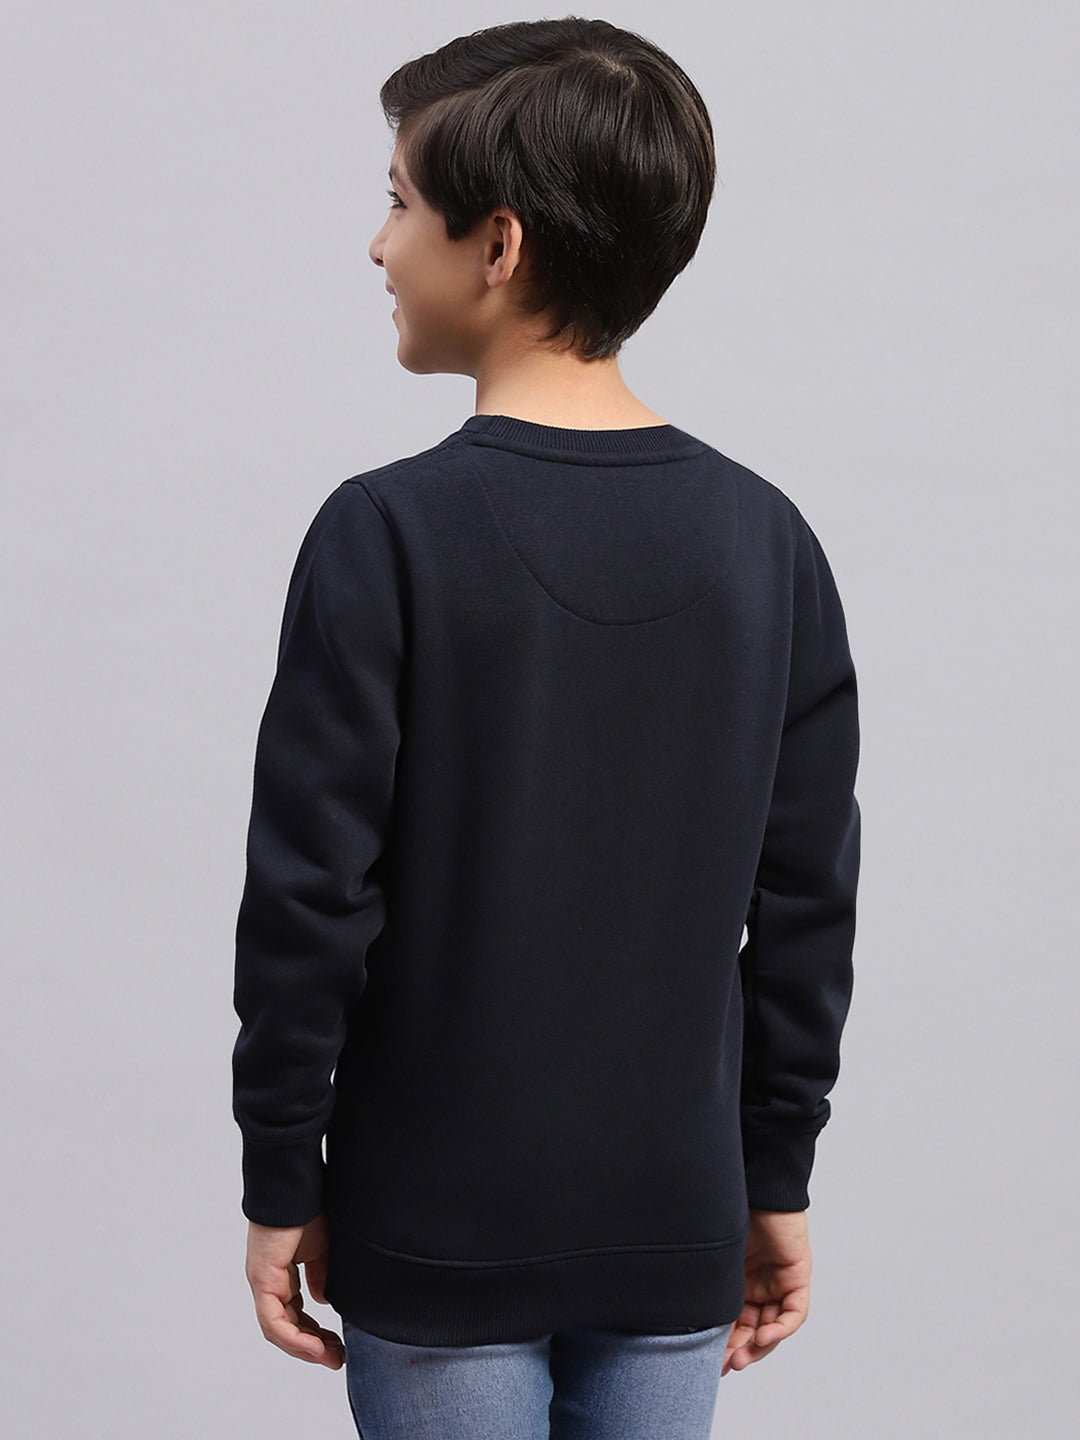 Boys Navy Blue Printed Round Neck Full Sleeve Sweatshirt